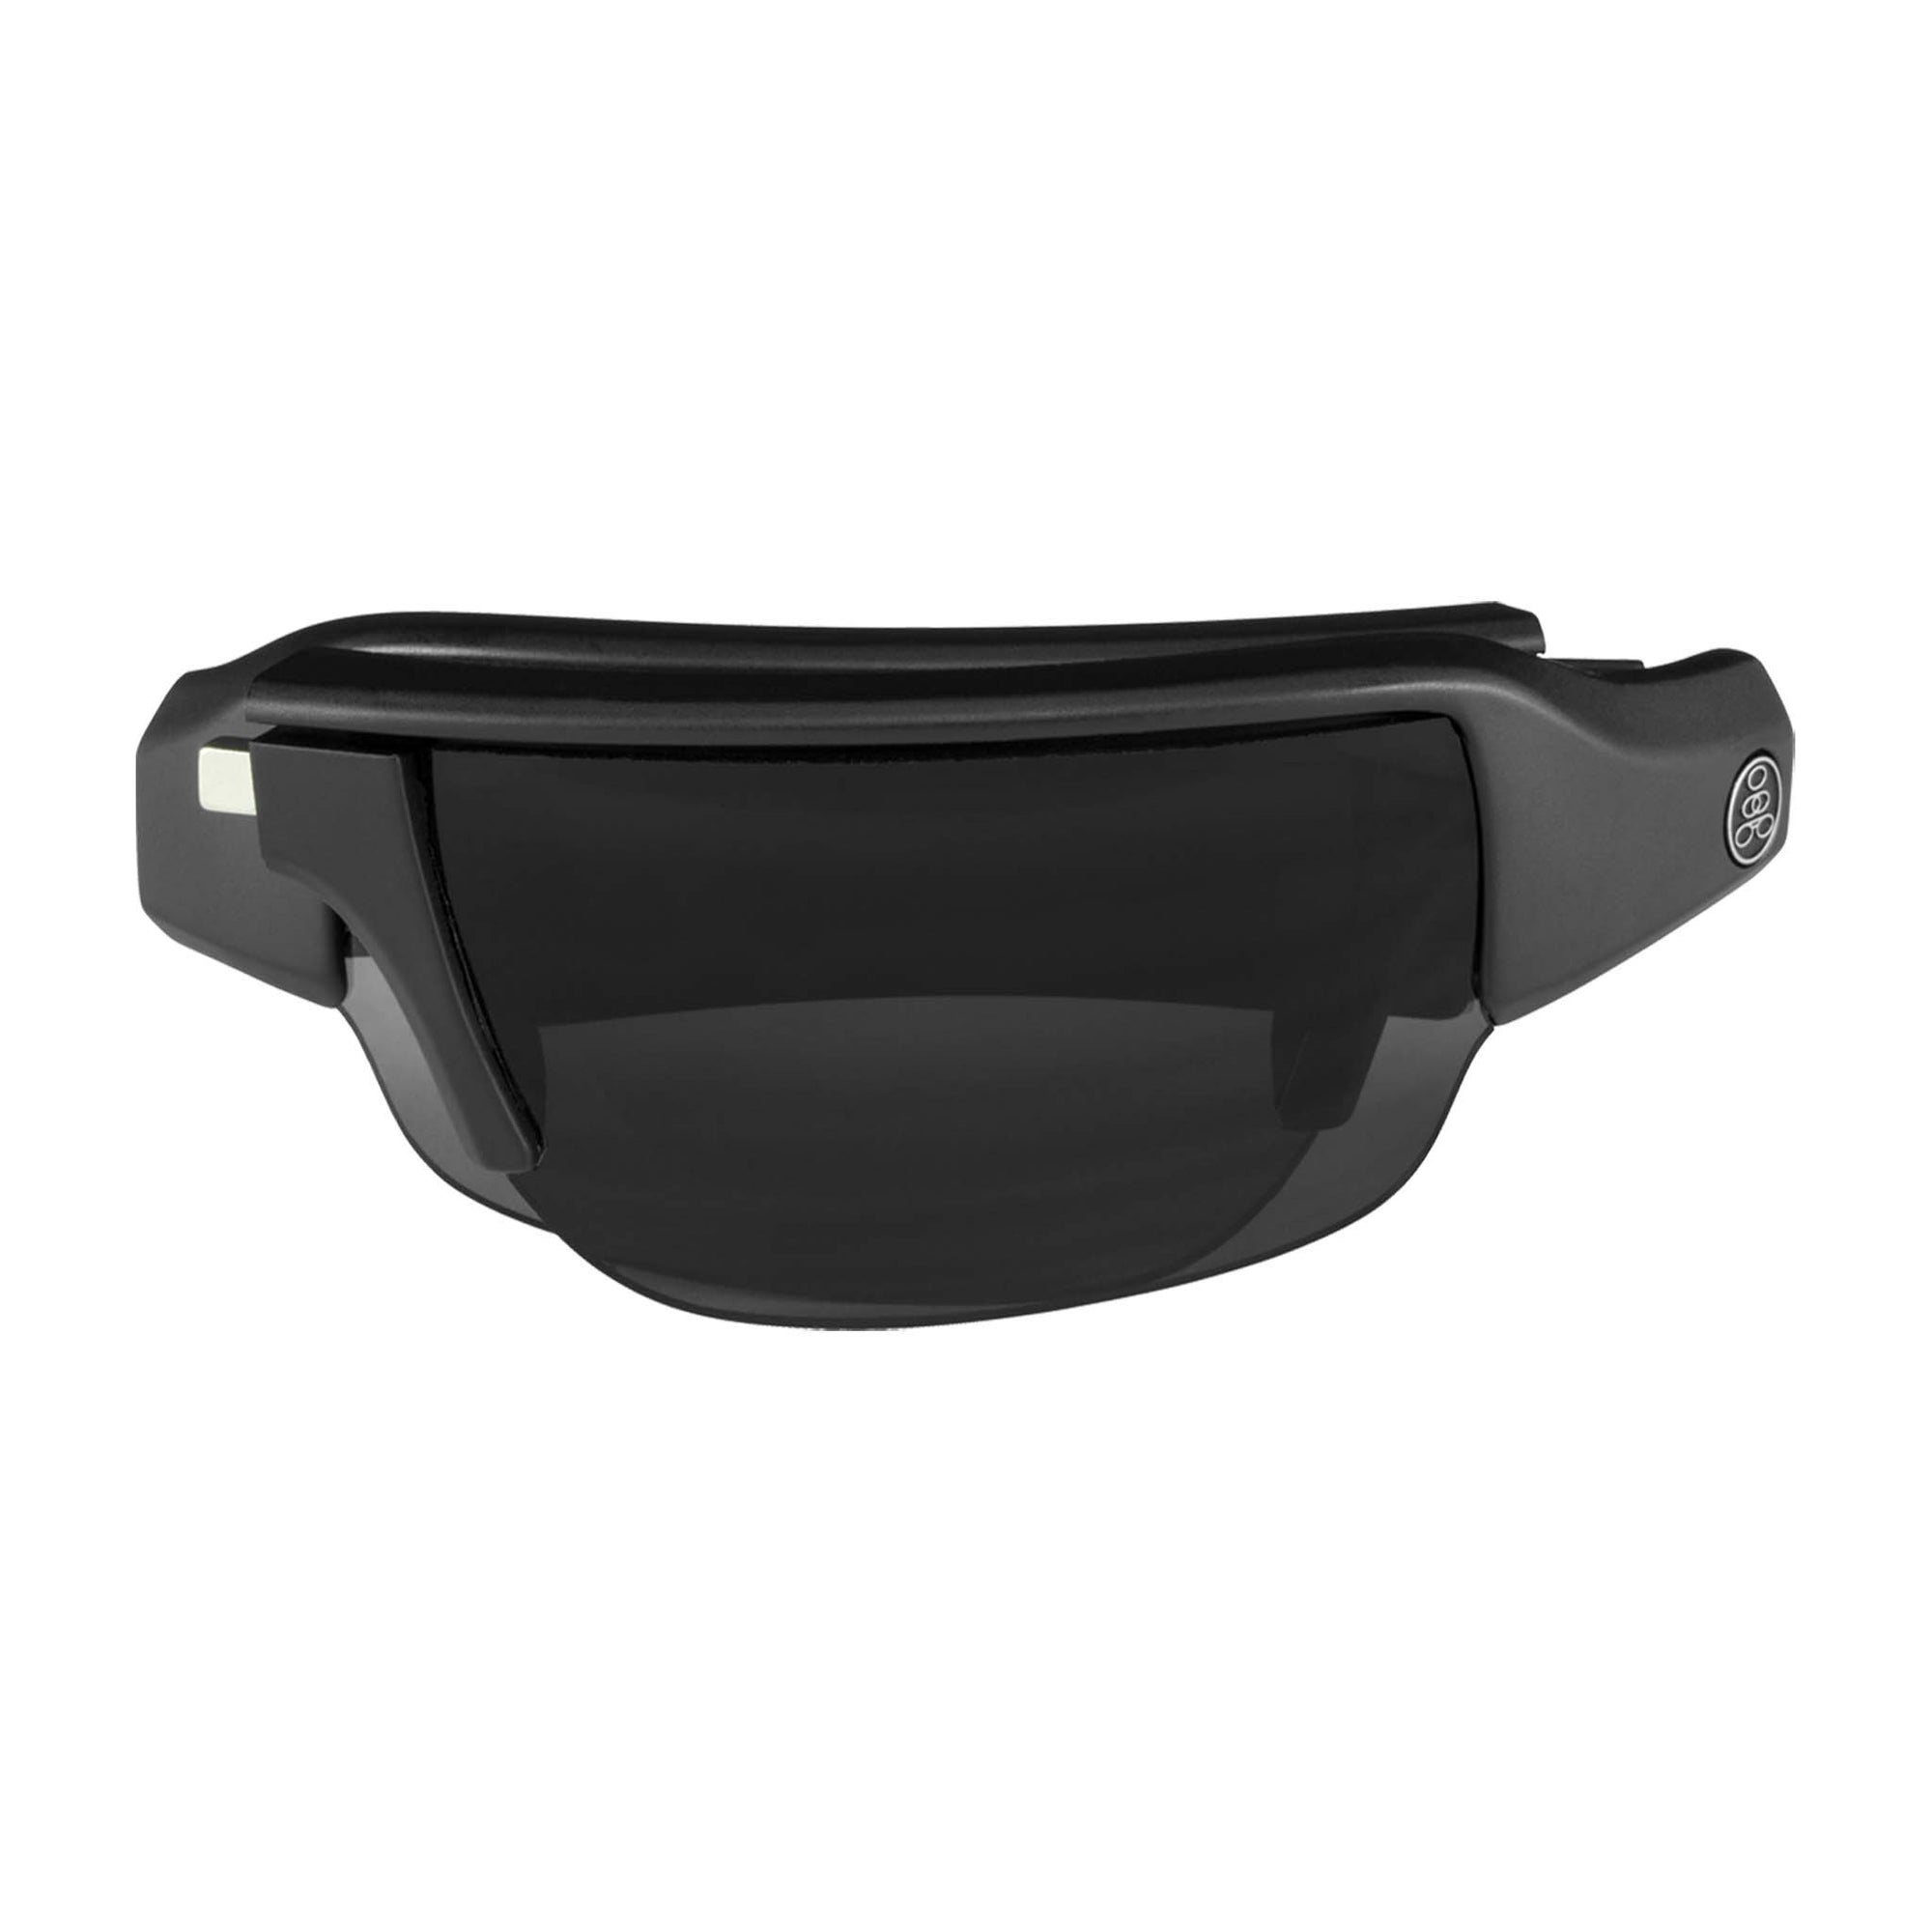 Popticals, Premium Compact Sunglasses, PopGun, 010010-BMGS, Standard Sunglasses, Matte Black Frame, Gray Lenses, Compact View